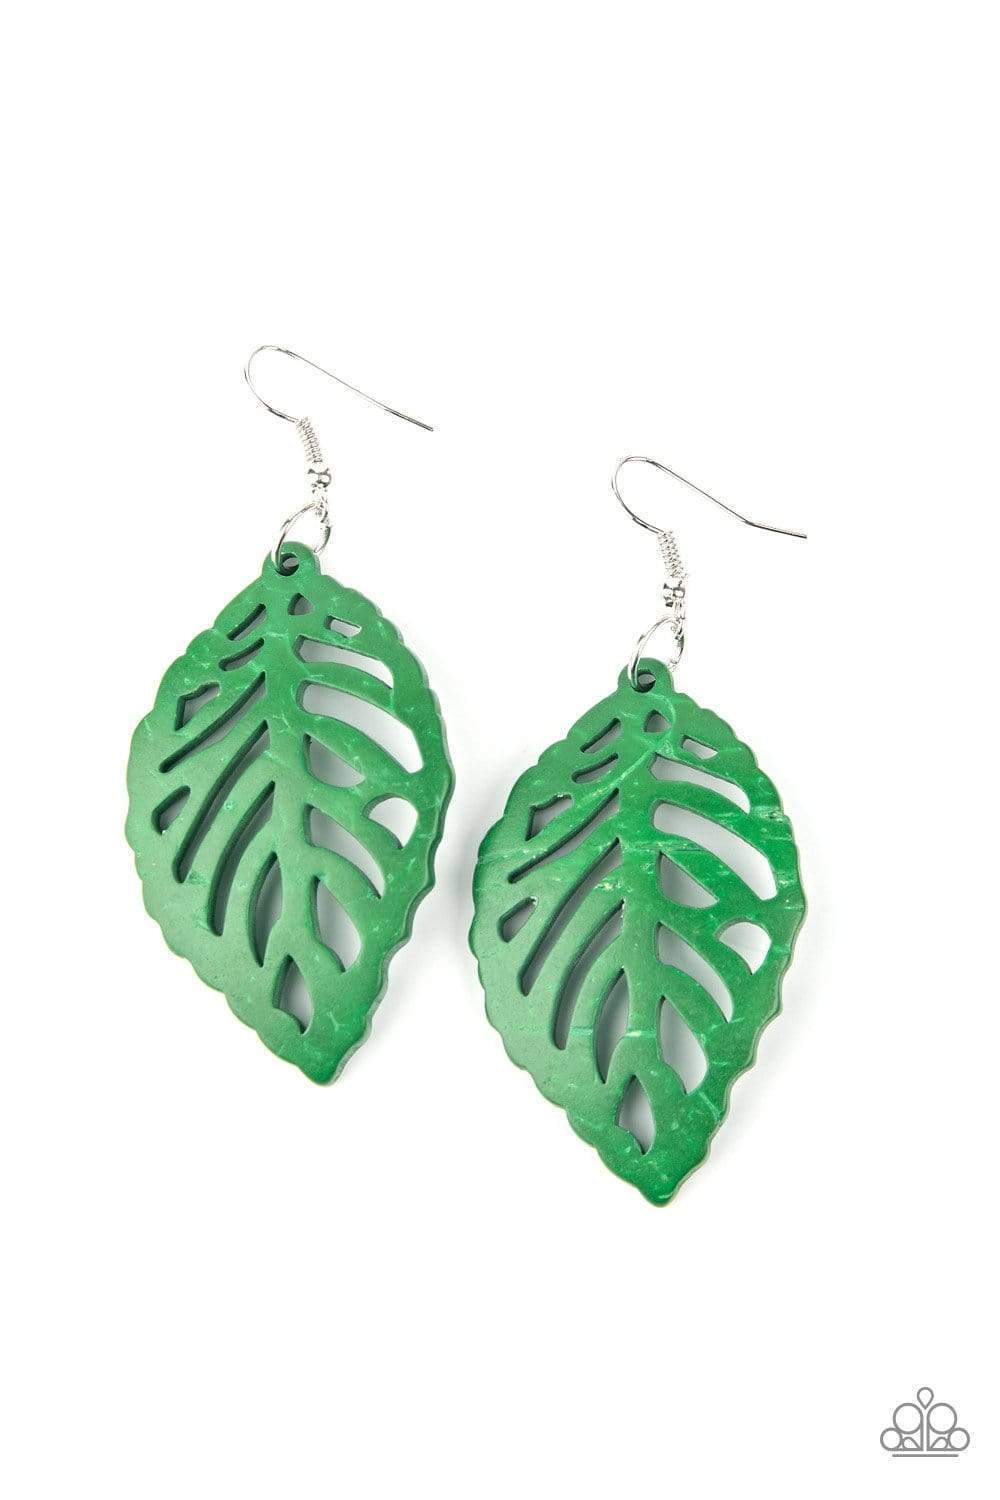 LEAF &#39;Em Hanging Green Wood Leaf Earrings - Paparazzi Accessories - lightbox -CarasShop.com - $5 Jewelry by Cara Jewels